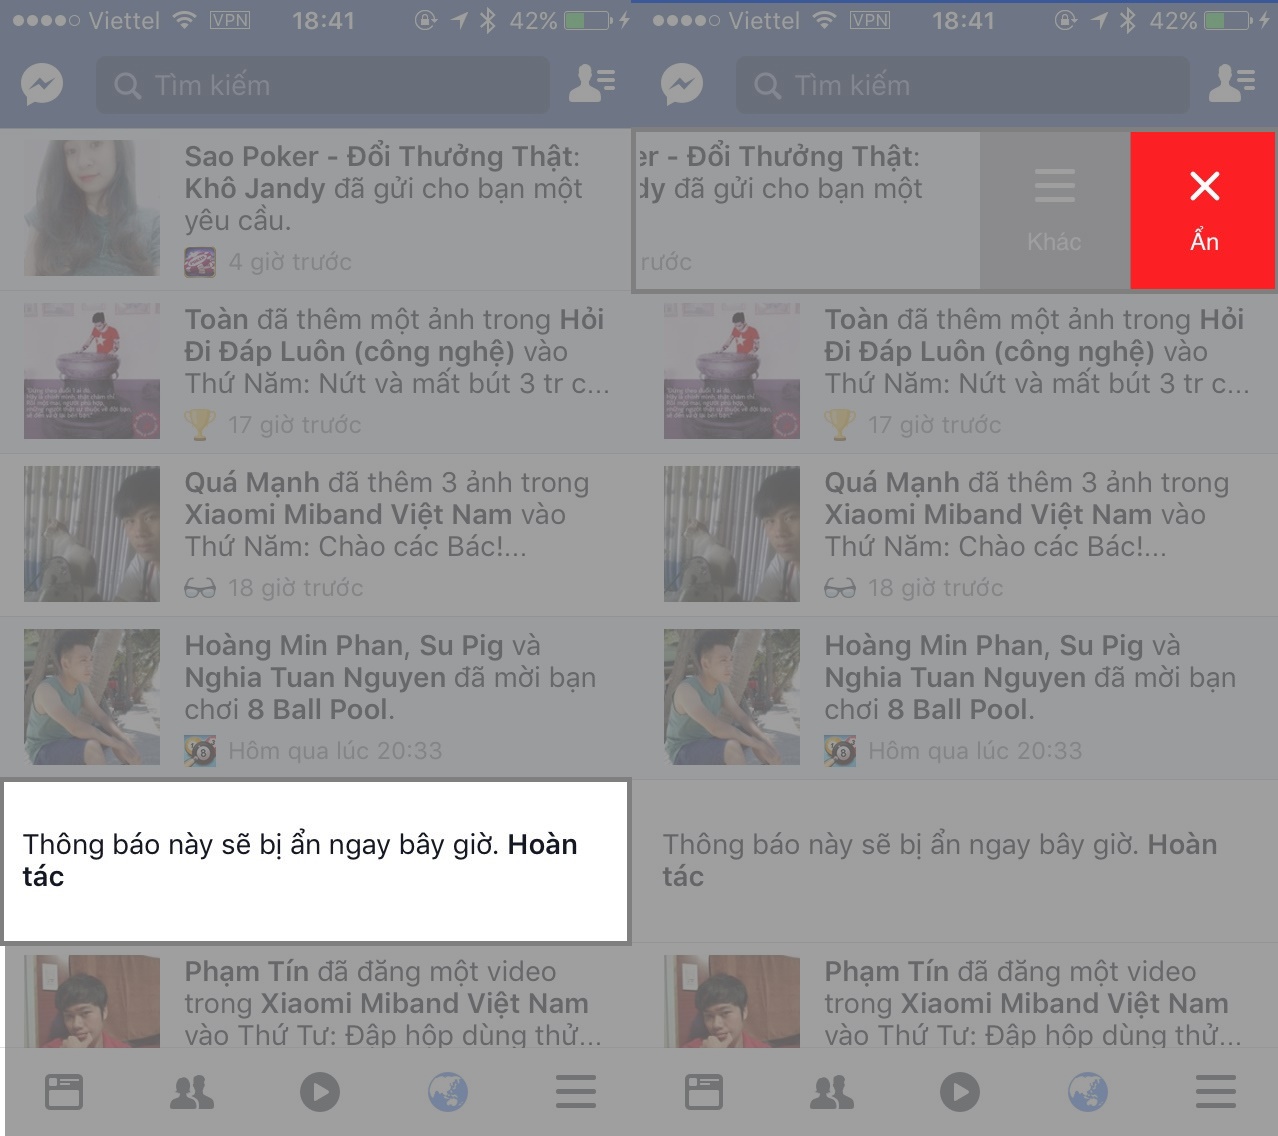 5 meo hay khong the bo lo khi su dung facebook tren iphone